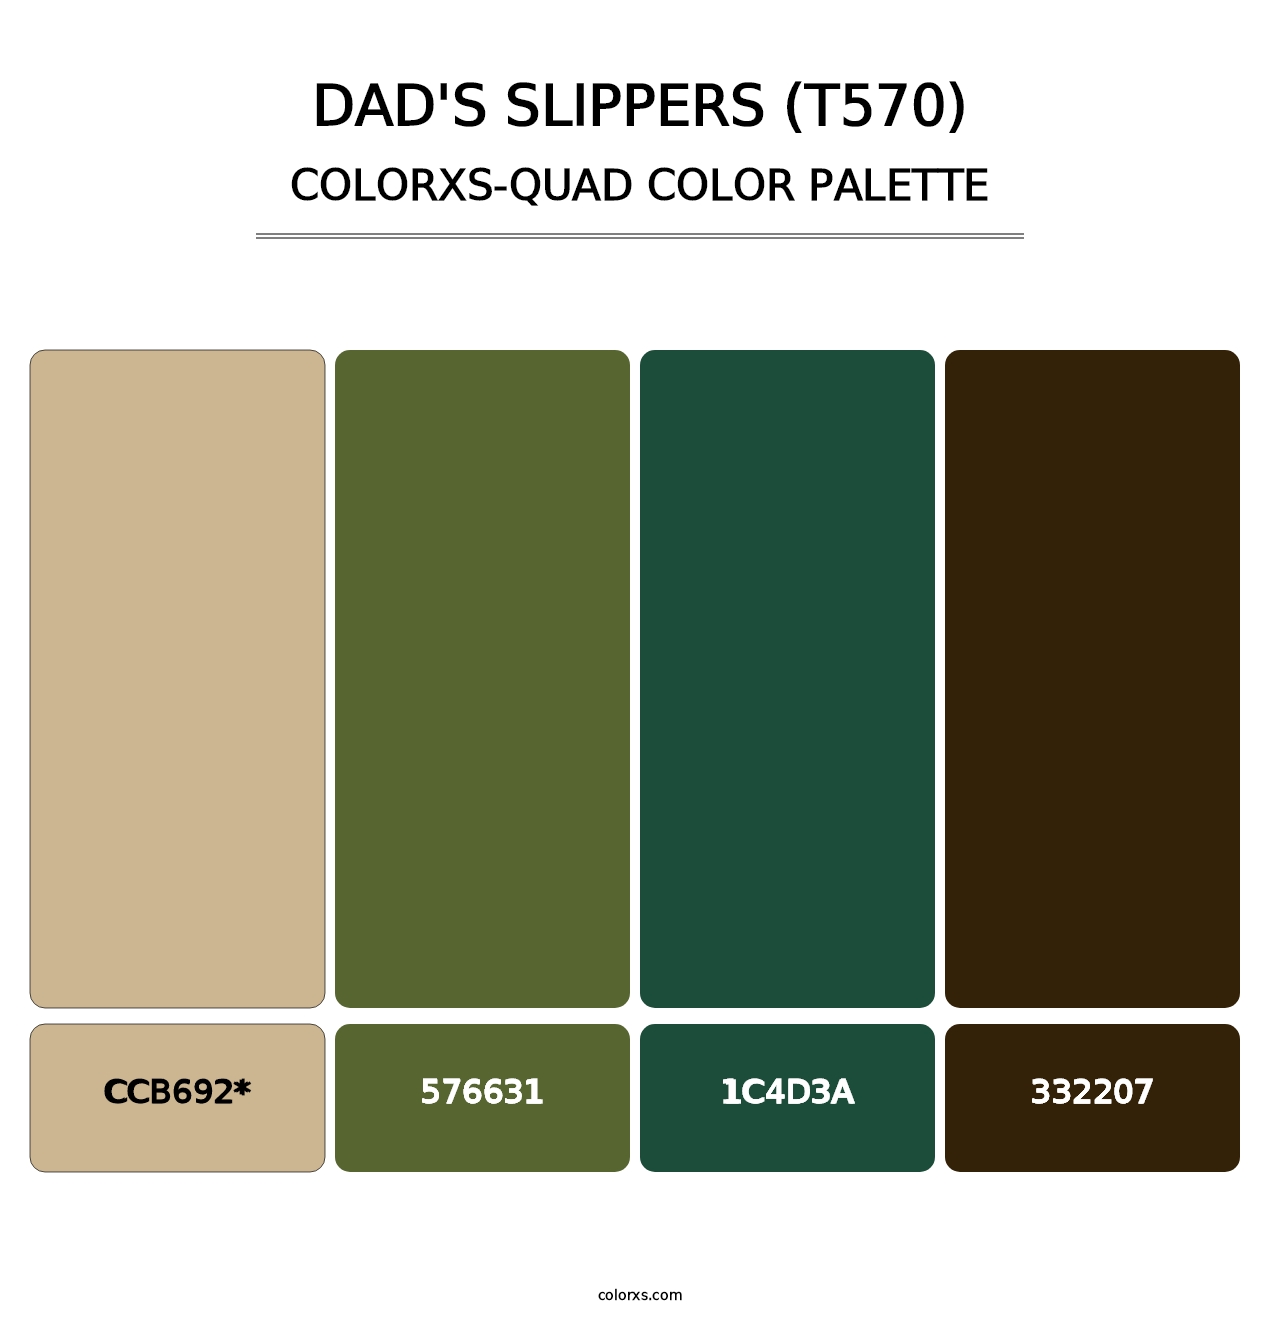 Dad's Slippers (T570) - Colorxs Quad Palette